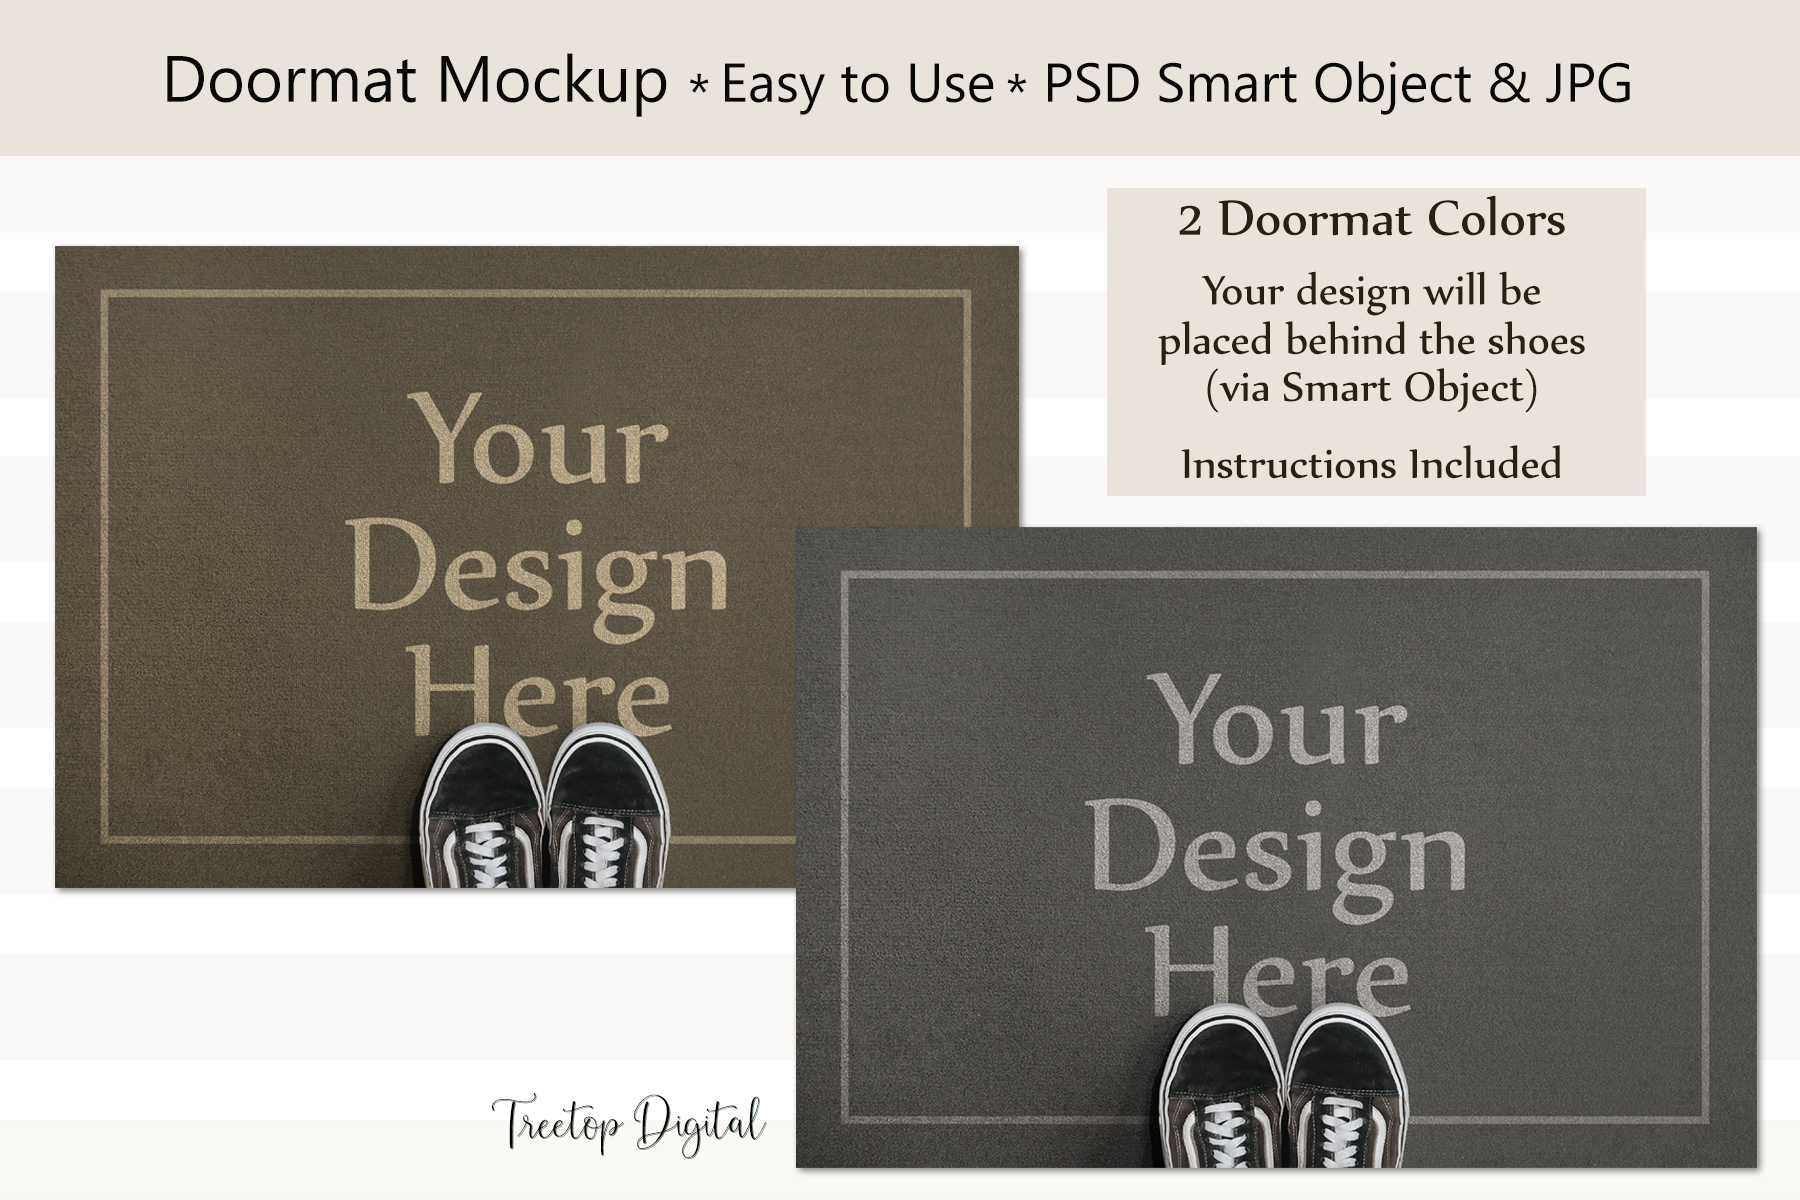 Download Doormat Mockup, Welcome Mat Mock Up, PSD, Smart Object & JPG PSD Mockup Templates